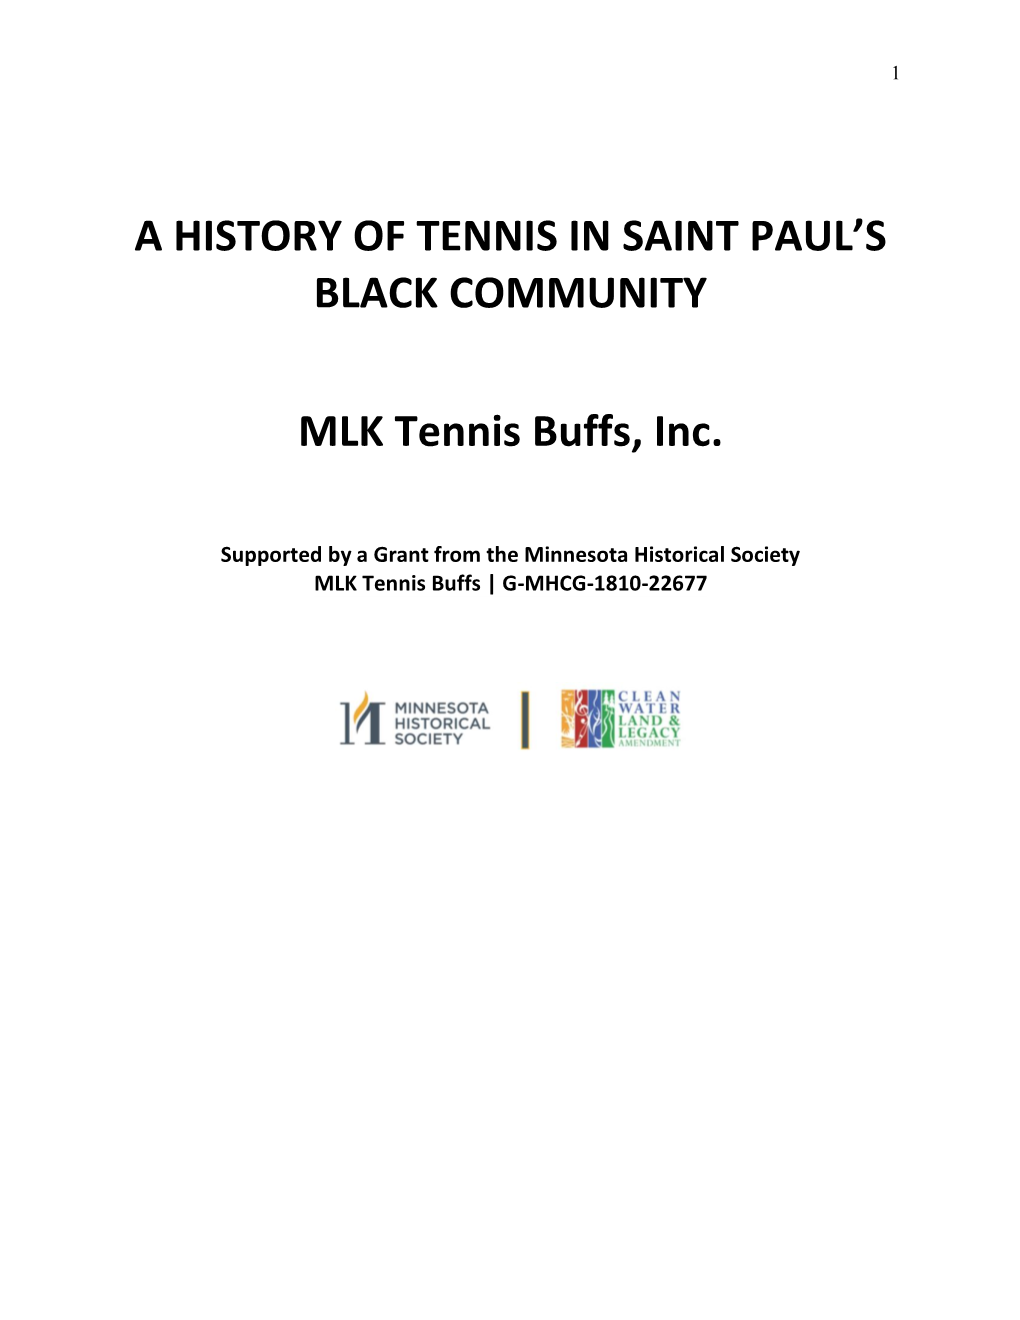 MLK Tennis Buffs History Project Document 12-31-2019